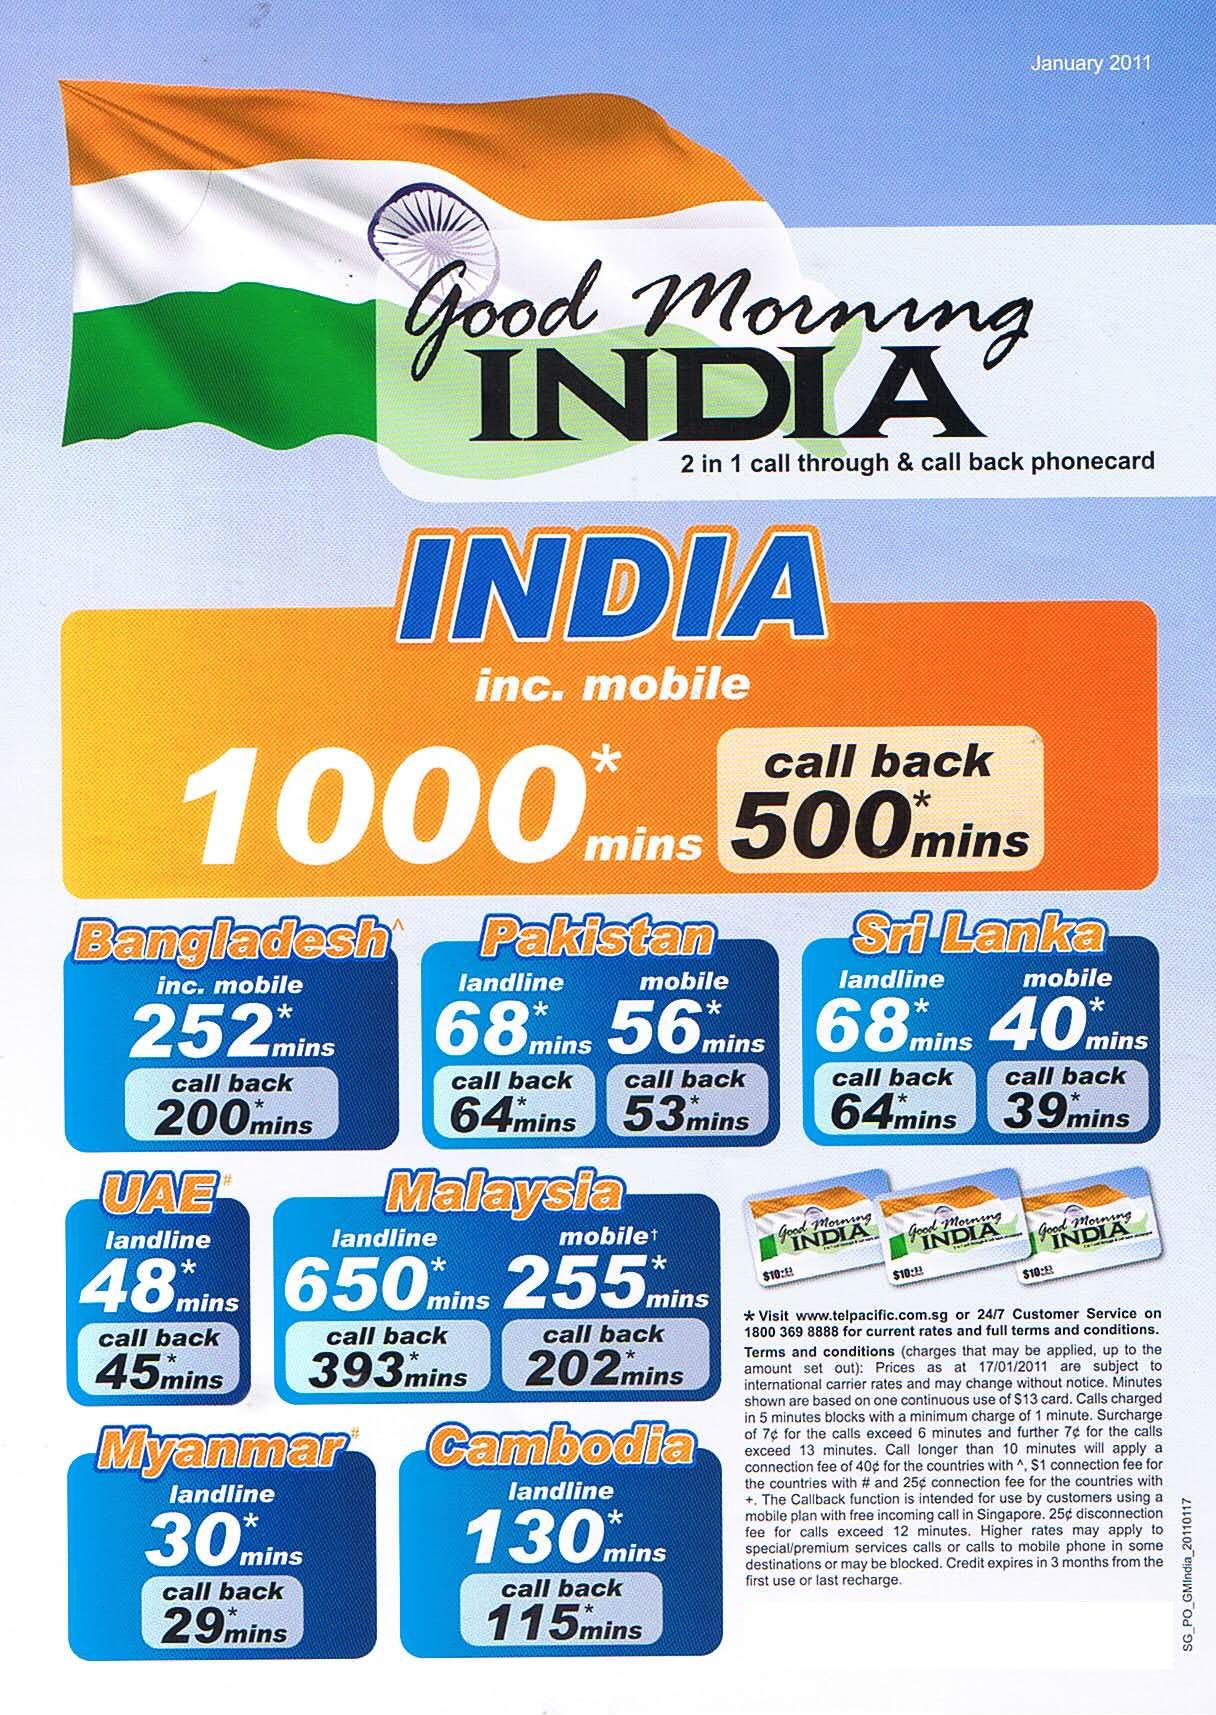 Good Morning India - Calling Card - Phonecard | Calling Card ...